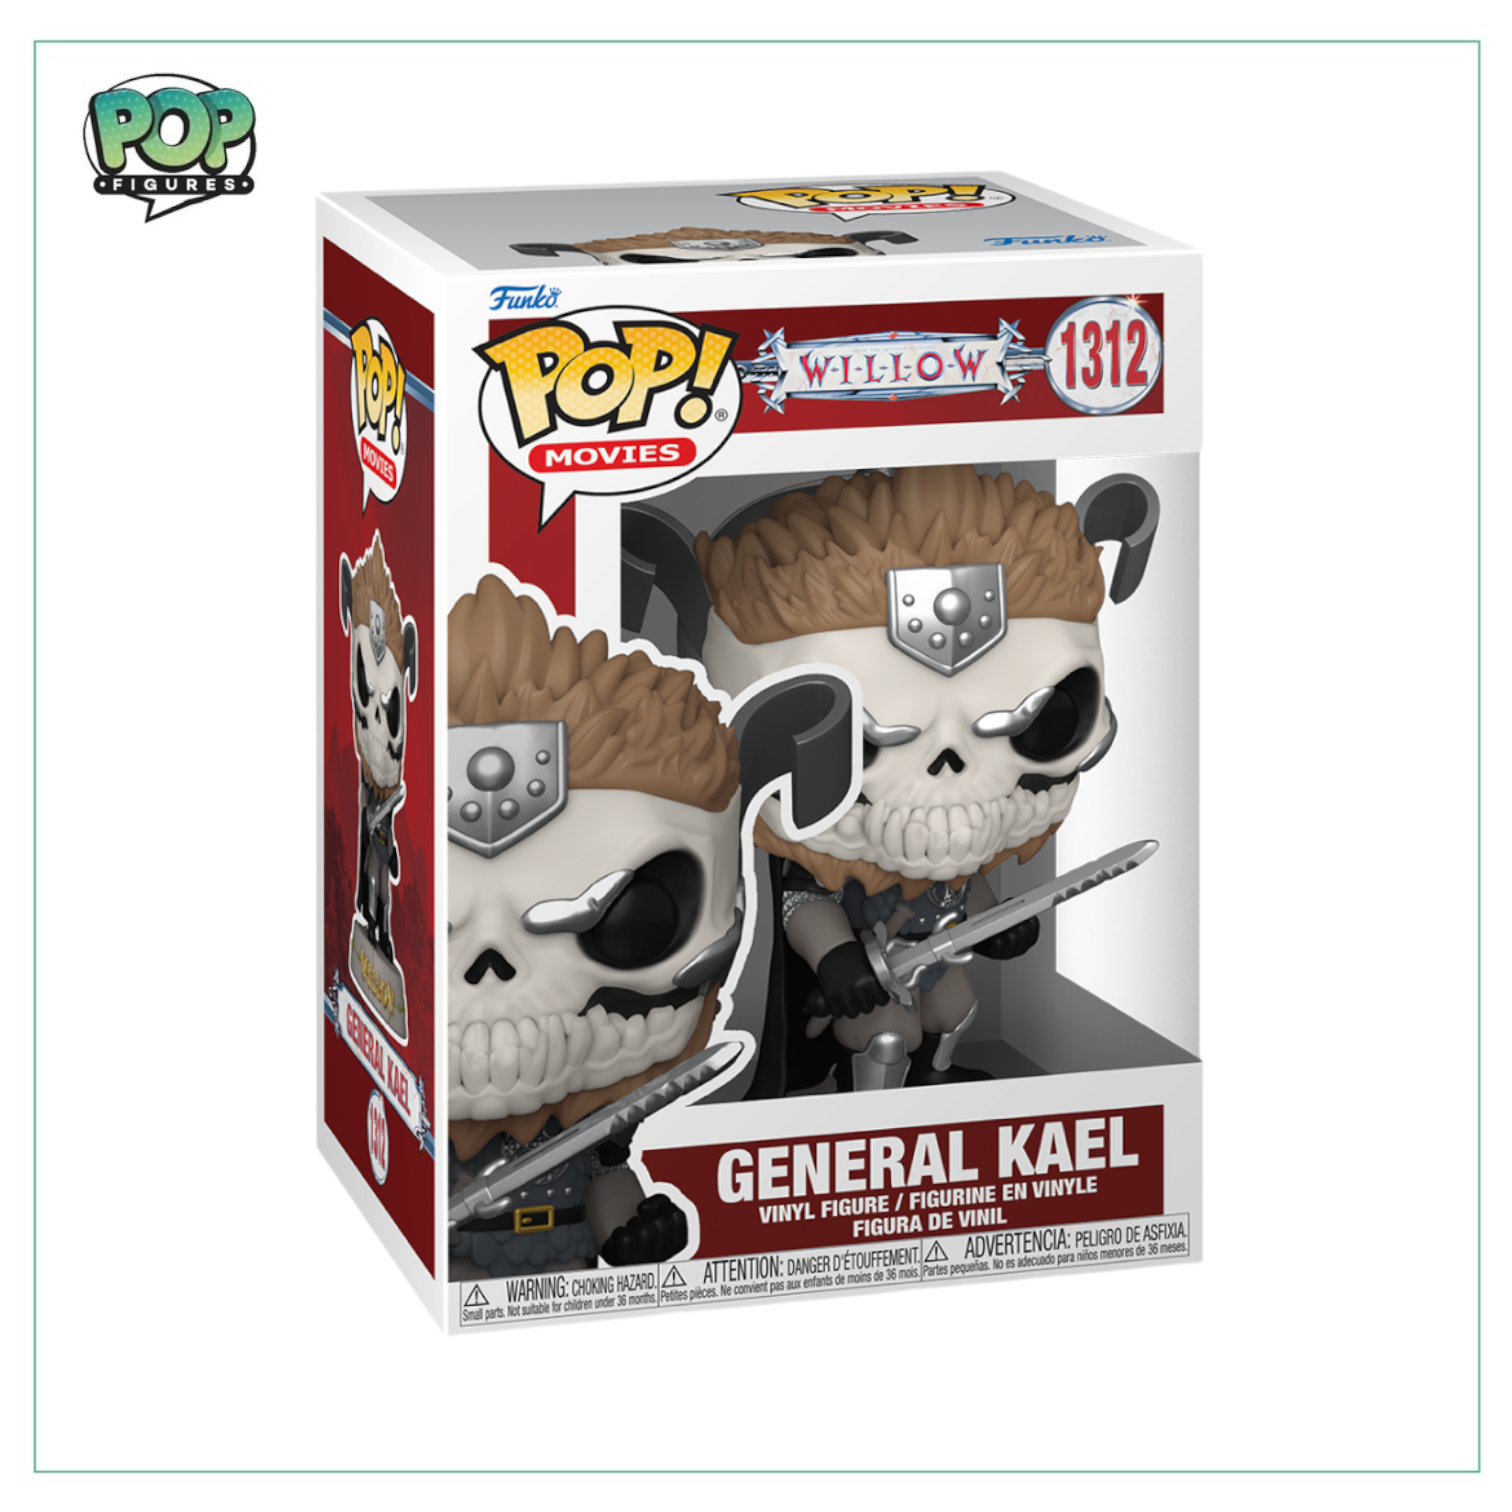 General Kael #1312 Funko Pop! - Willow